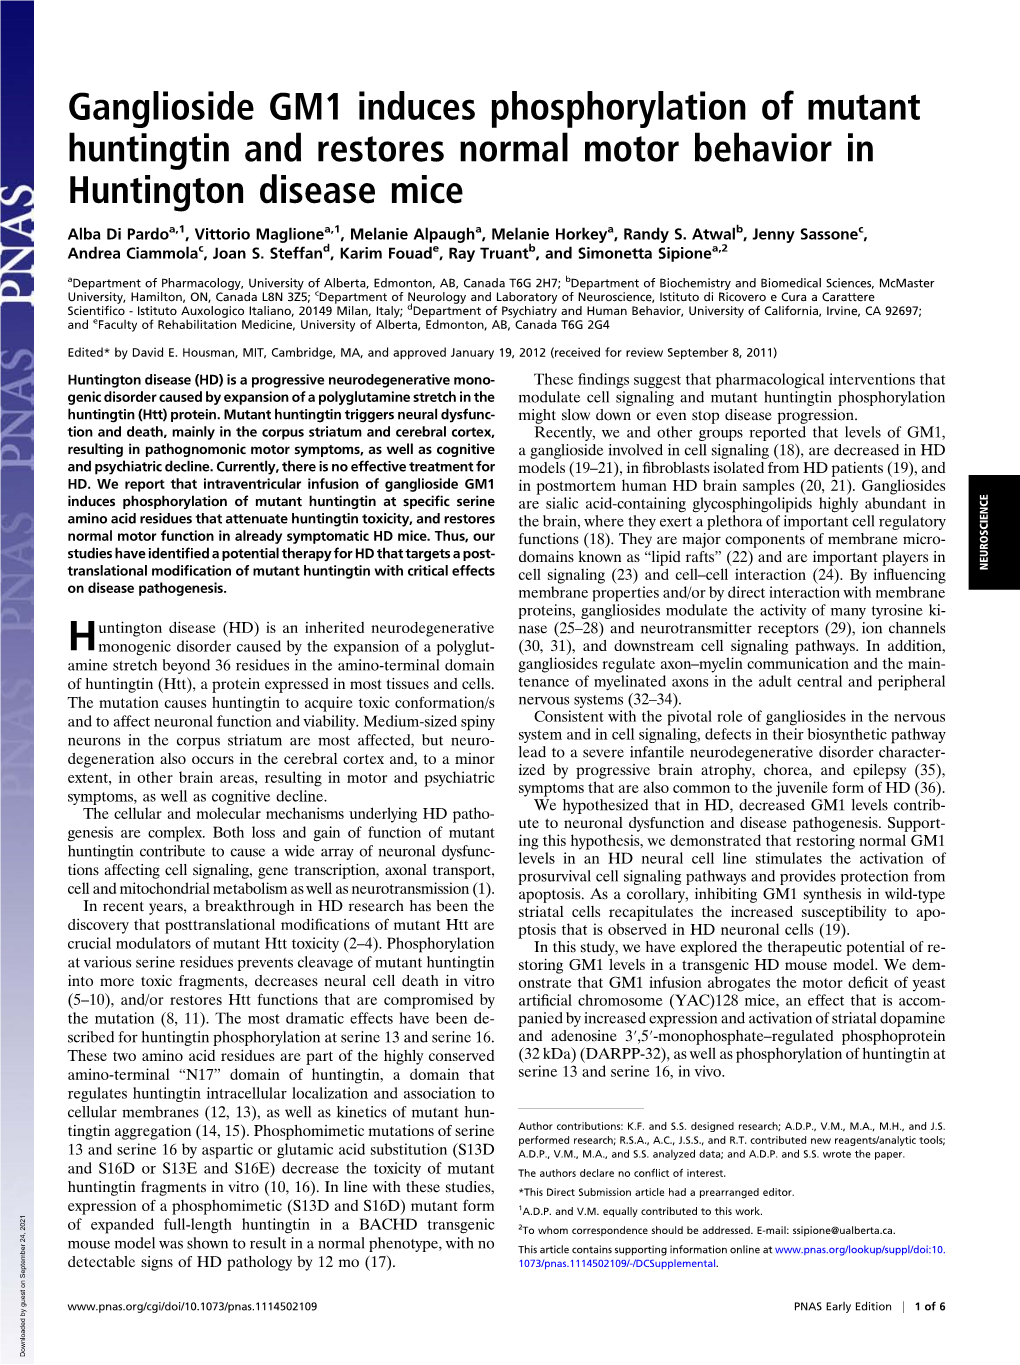 Ganglioside GM1 Induces Phosphorylation of Mutant Huntingtin and Restores Normal Motor Behavior in Huntington Disease Mice